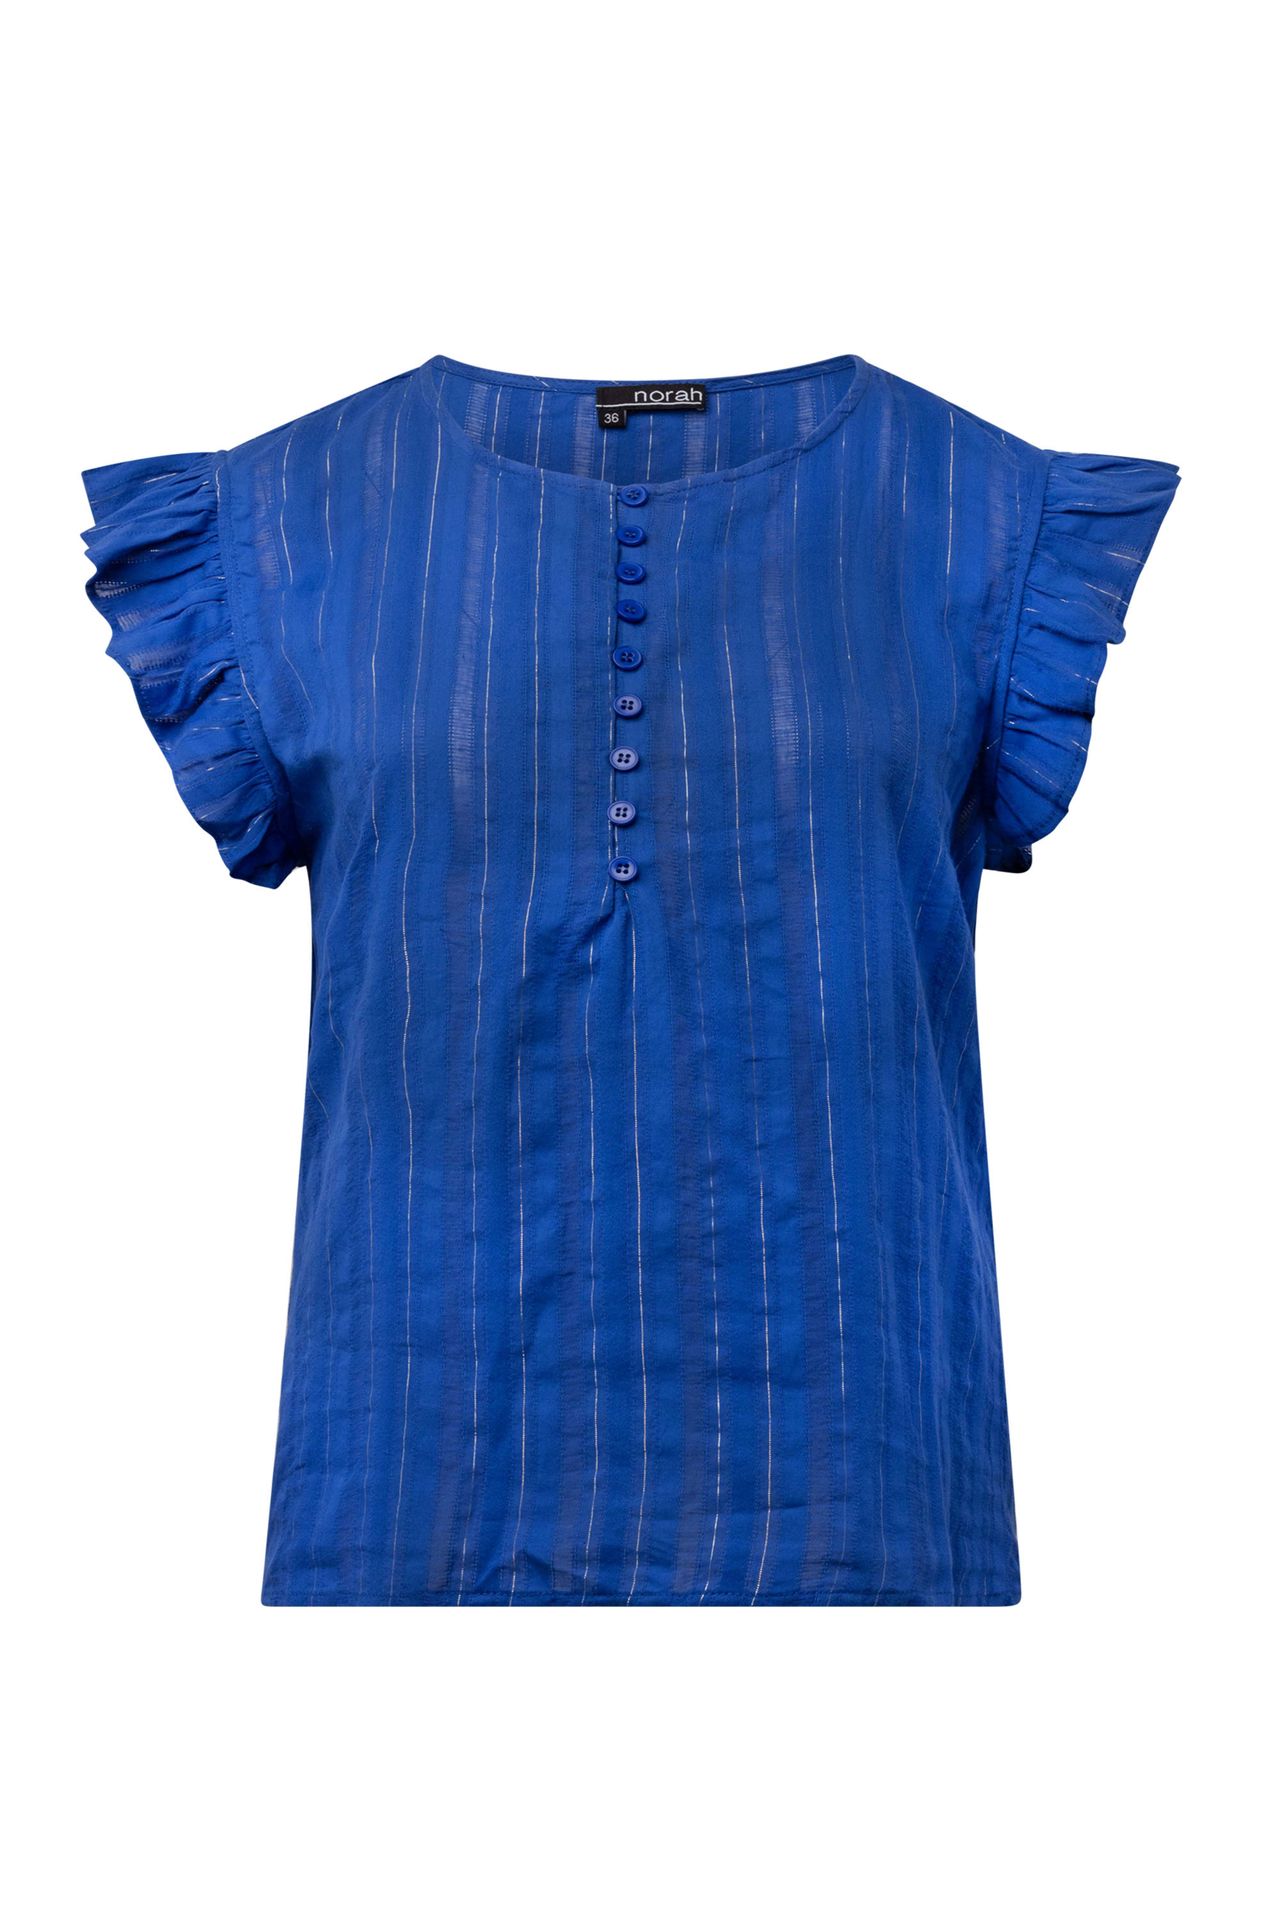 Norah Blauwe blouse cobalt multicolor 214812-469